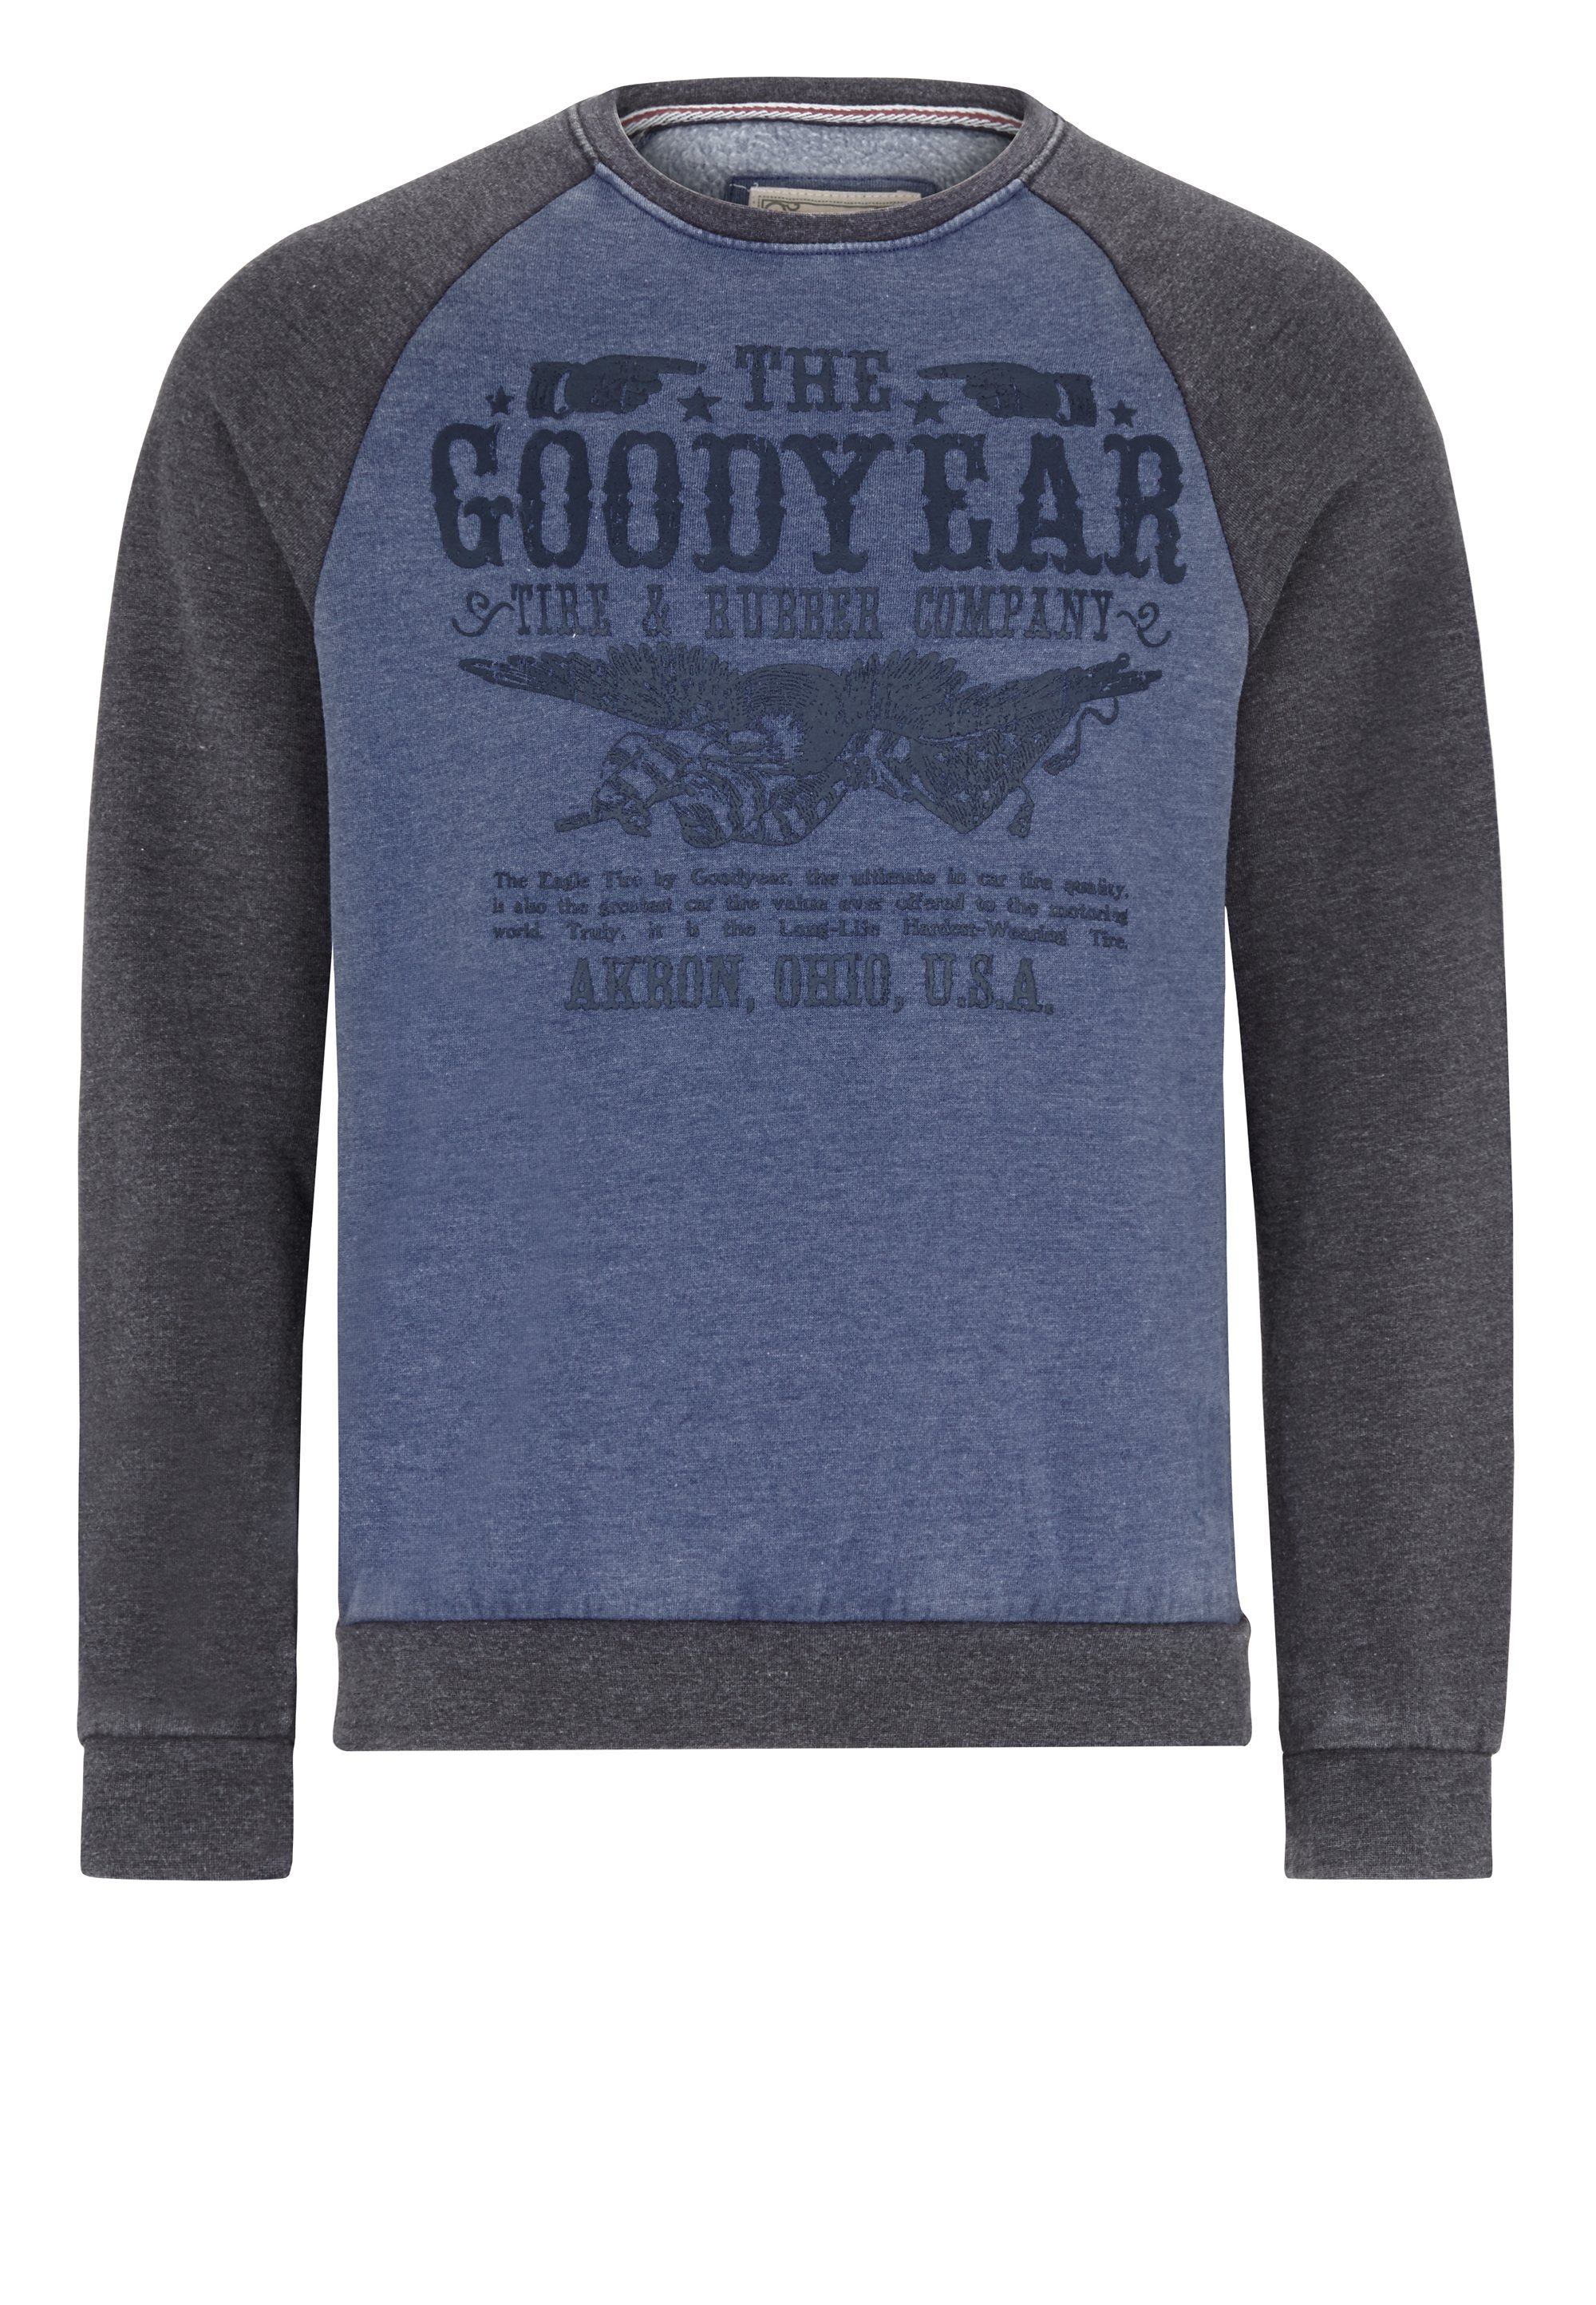 Goodyear Sweatshirt